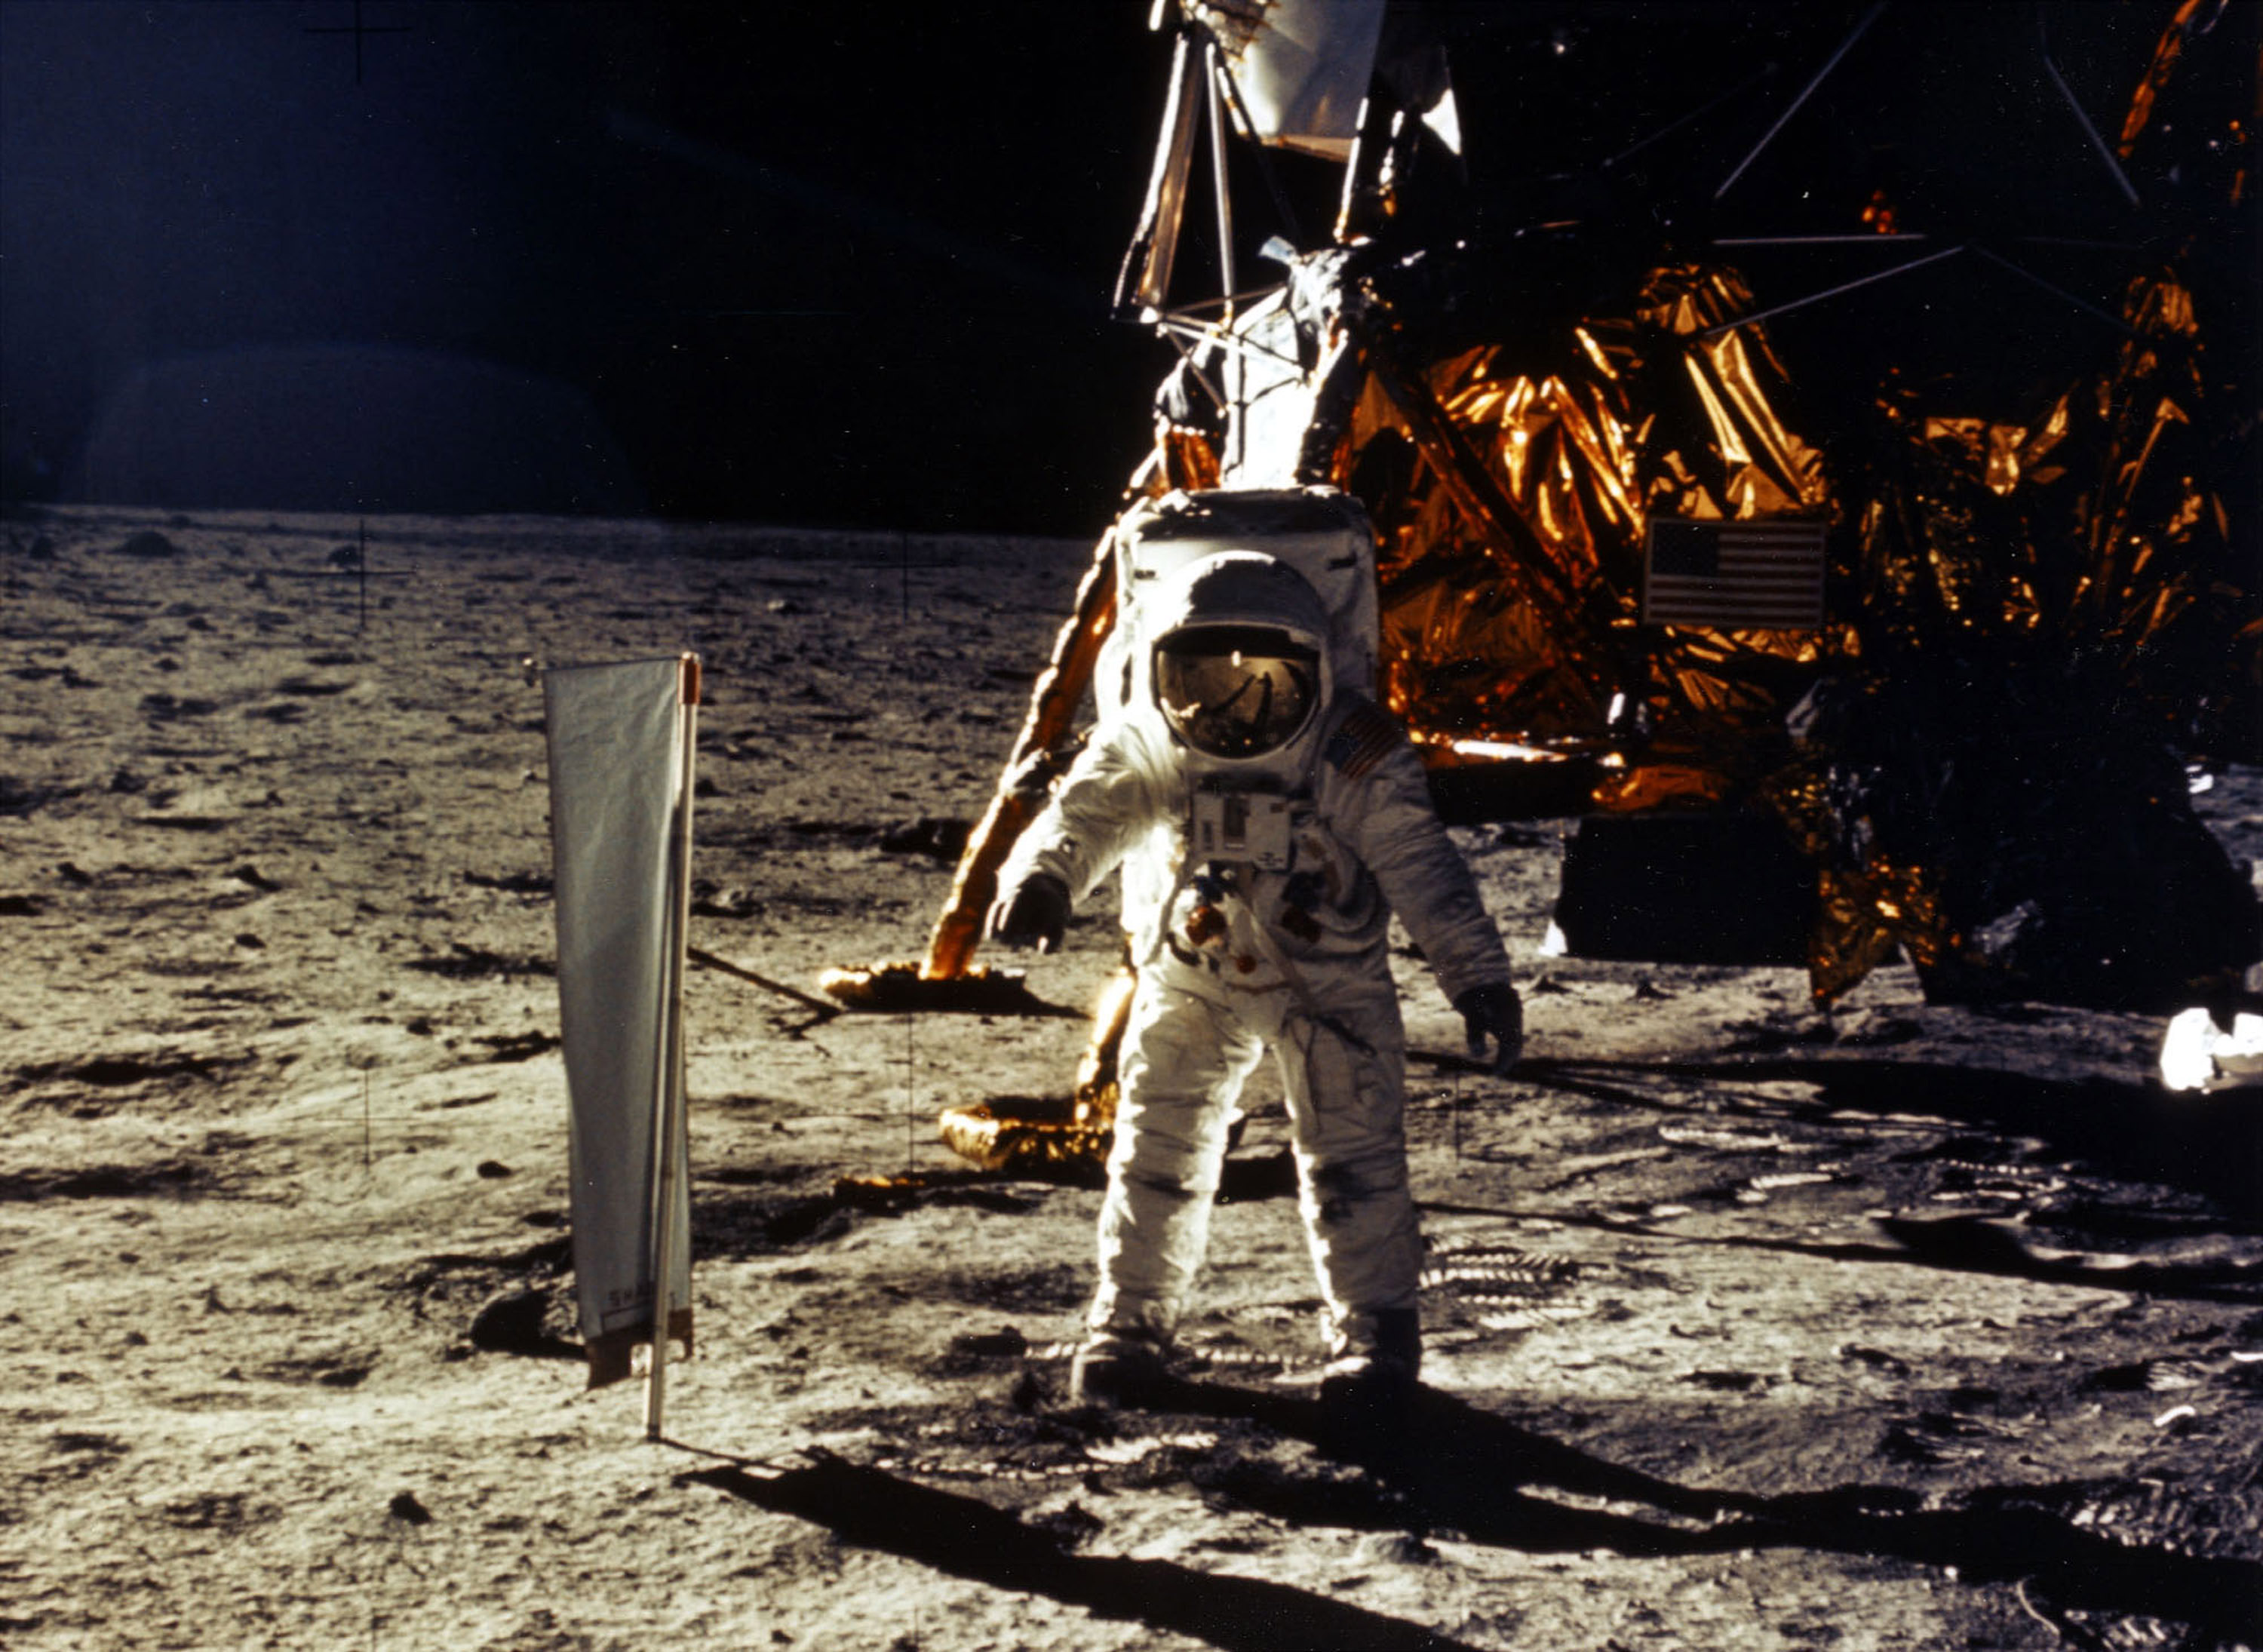 The astronauts on the moon. Apollo 11 1969.